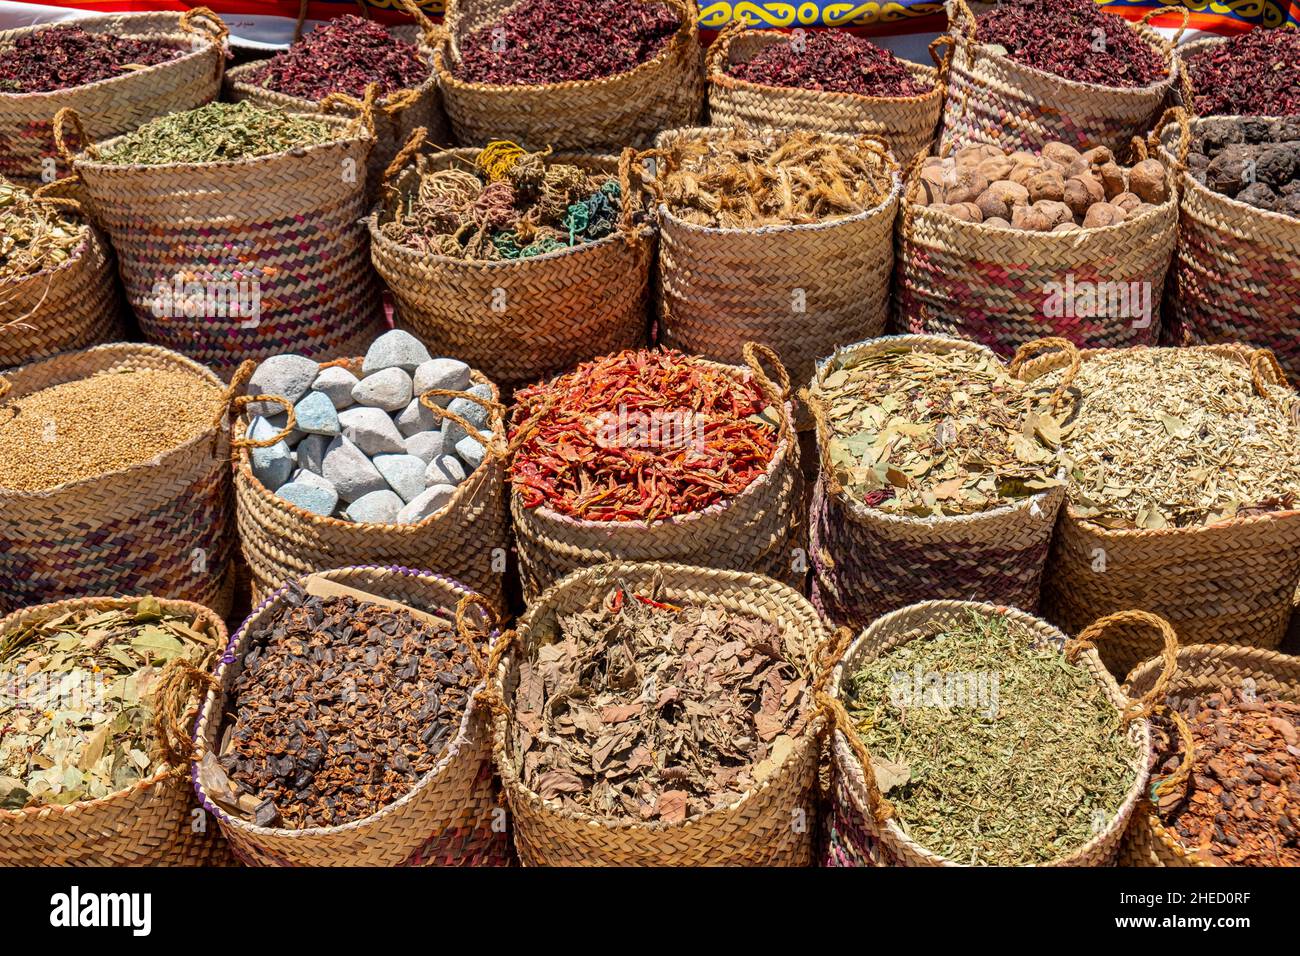 Egypt, Upper Egypt, Nile Valley, Aswan, Nubian village, spice stall Stock Photo